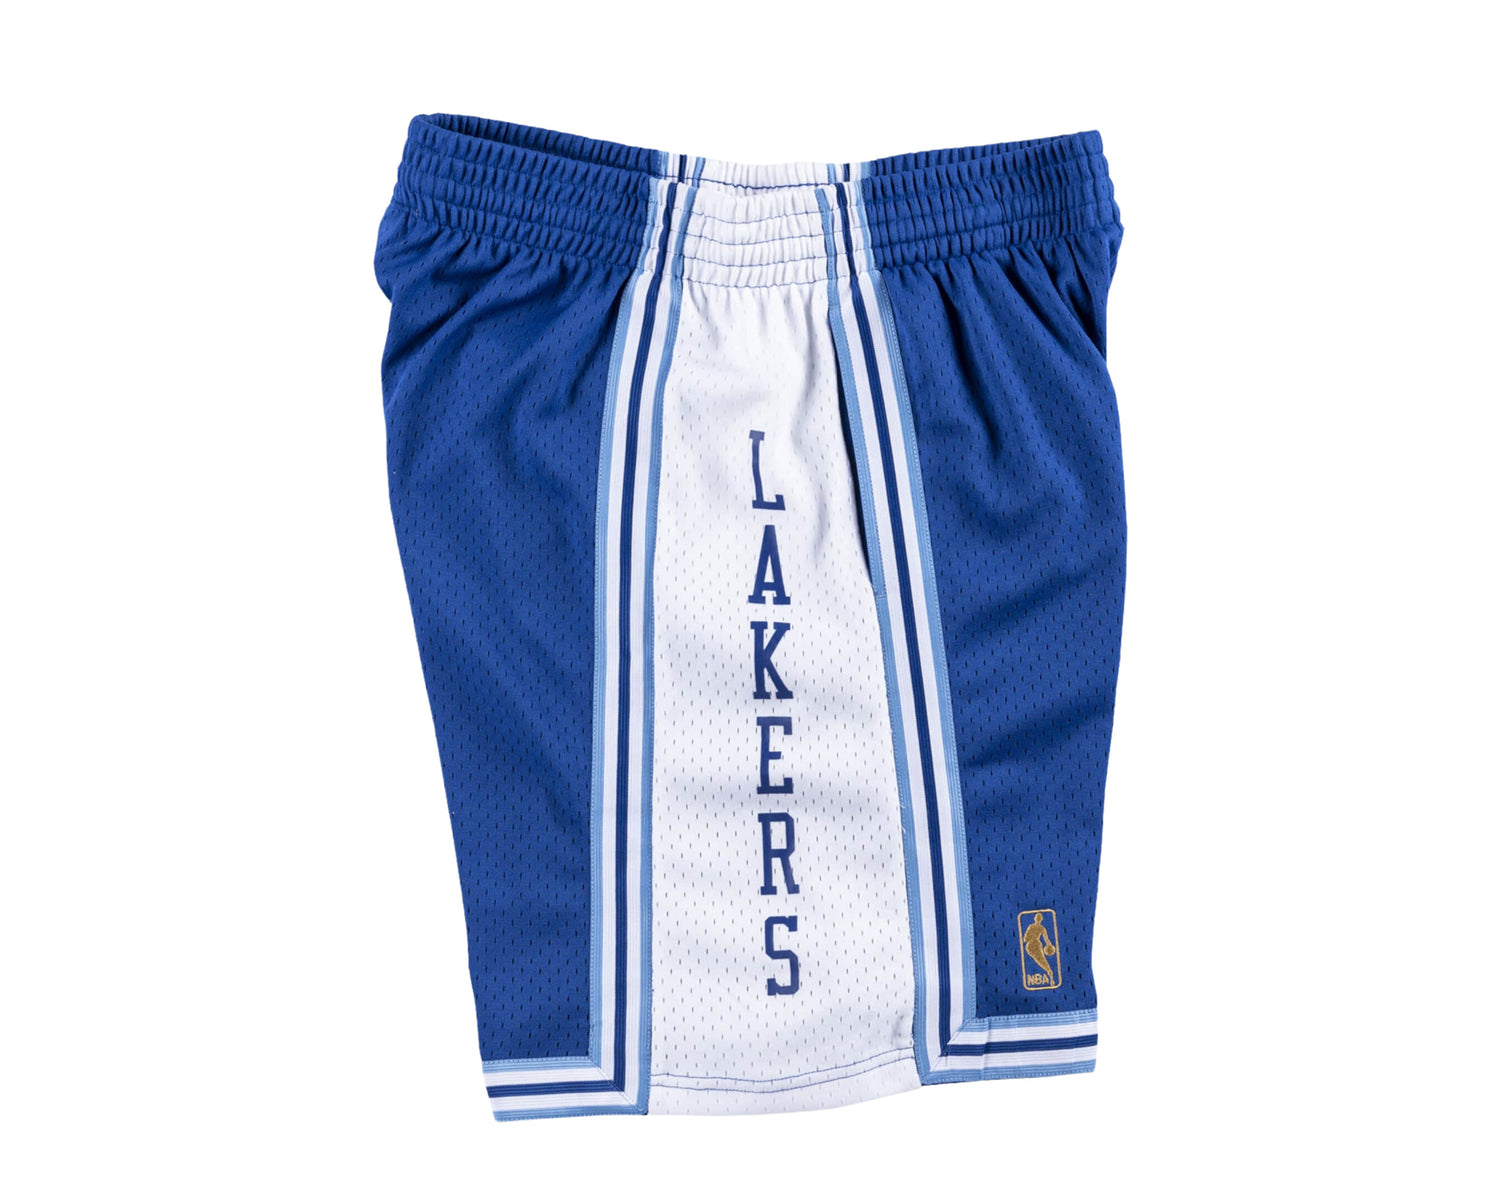 Mitchell & Ness NBA Swingman Los Angeles Lakers Alternate 1996-97 Men's Shorts